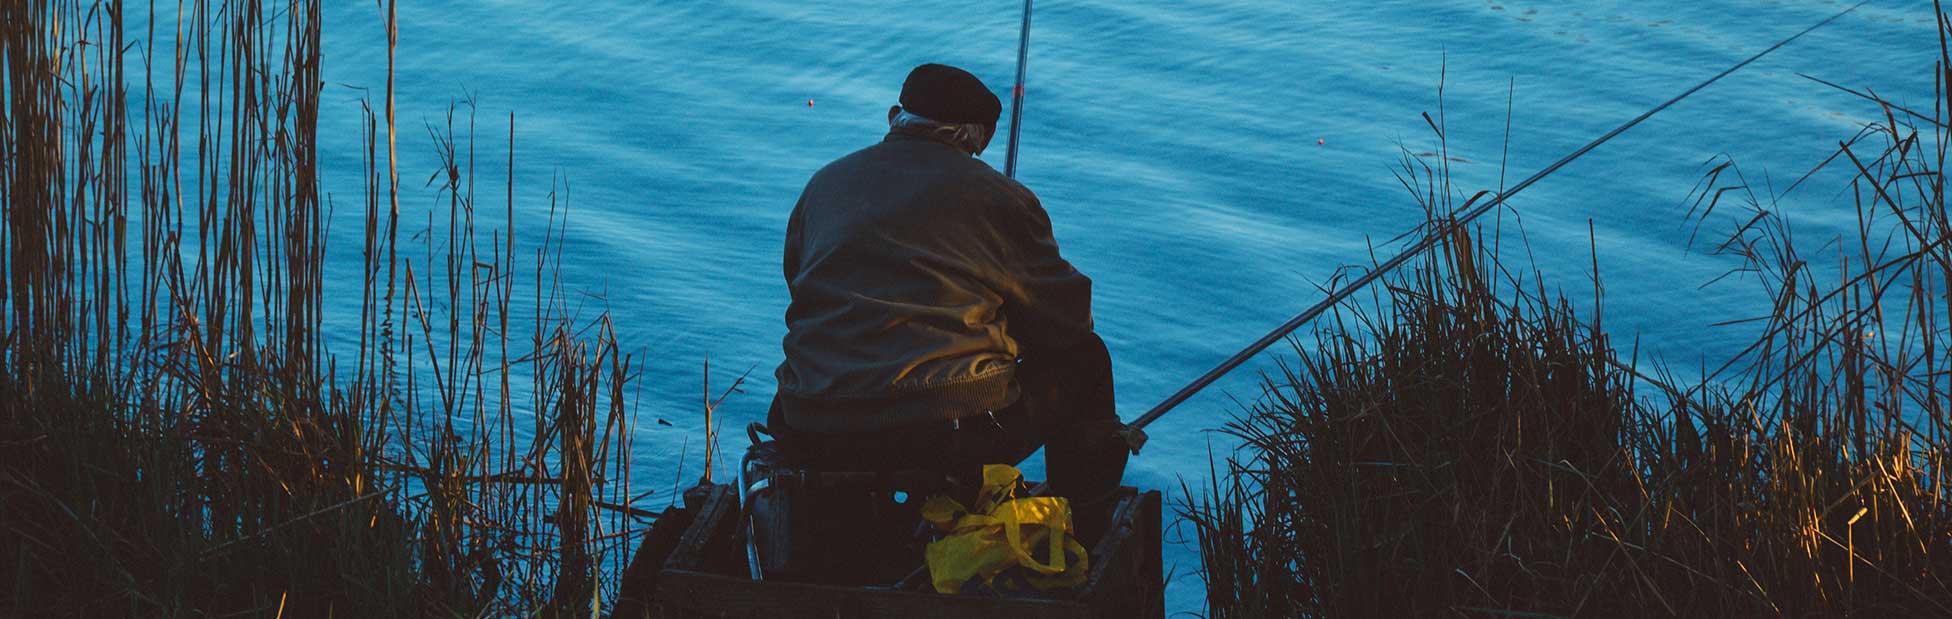 Old man sitting on edge of waterway fishing